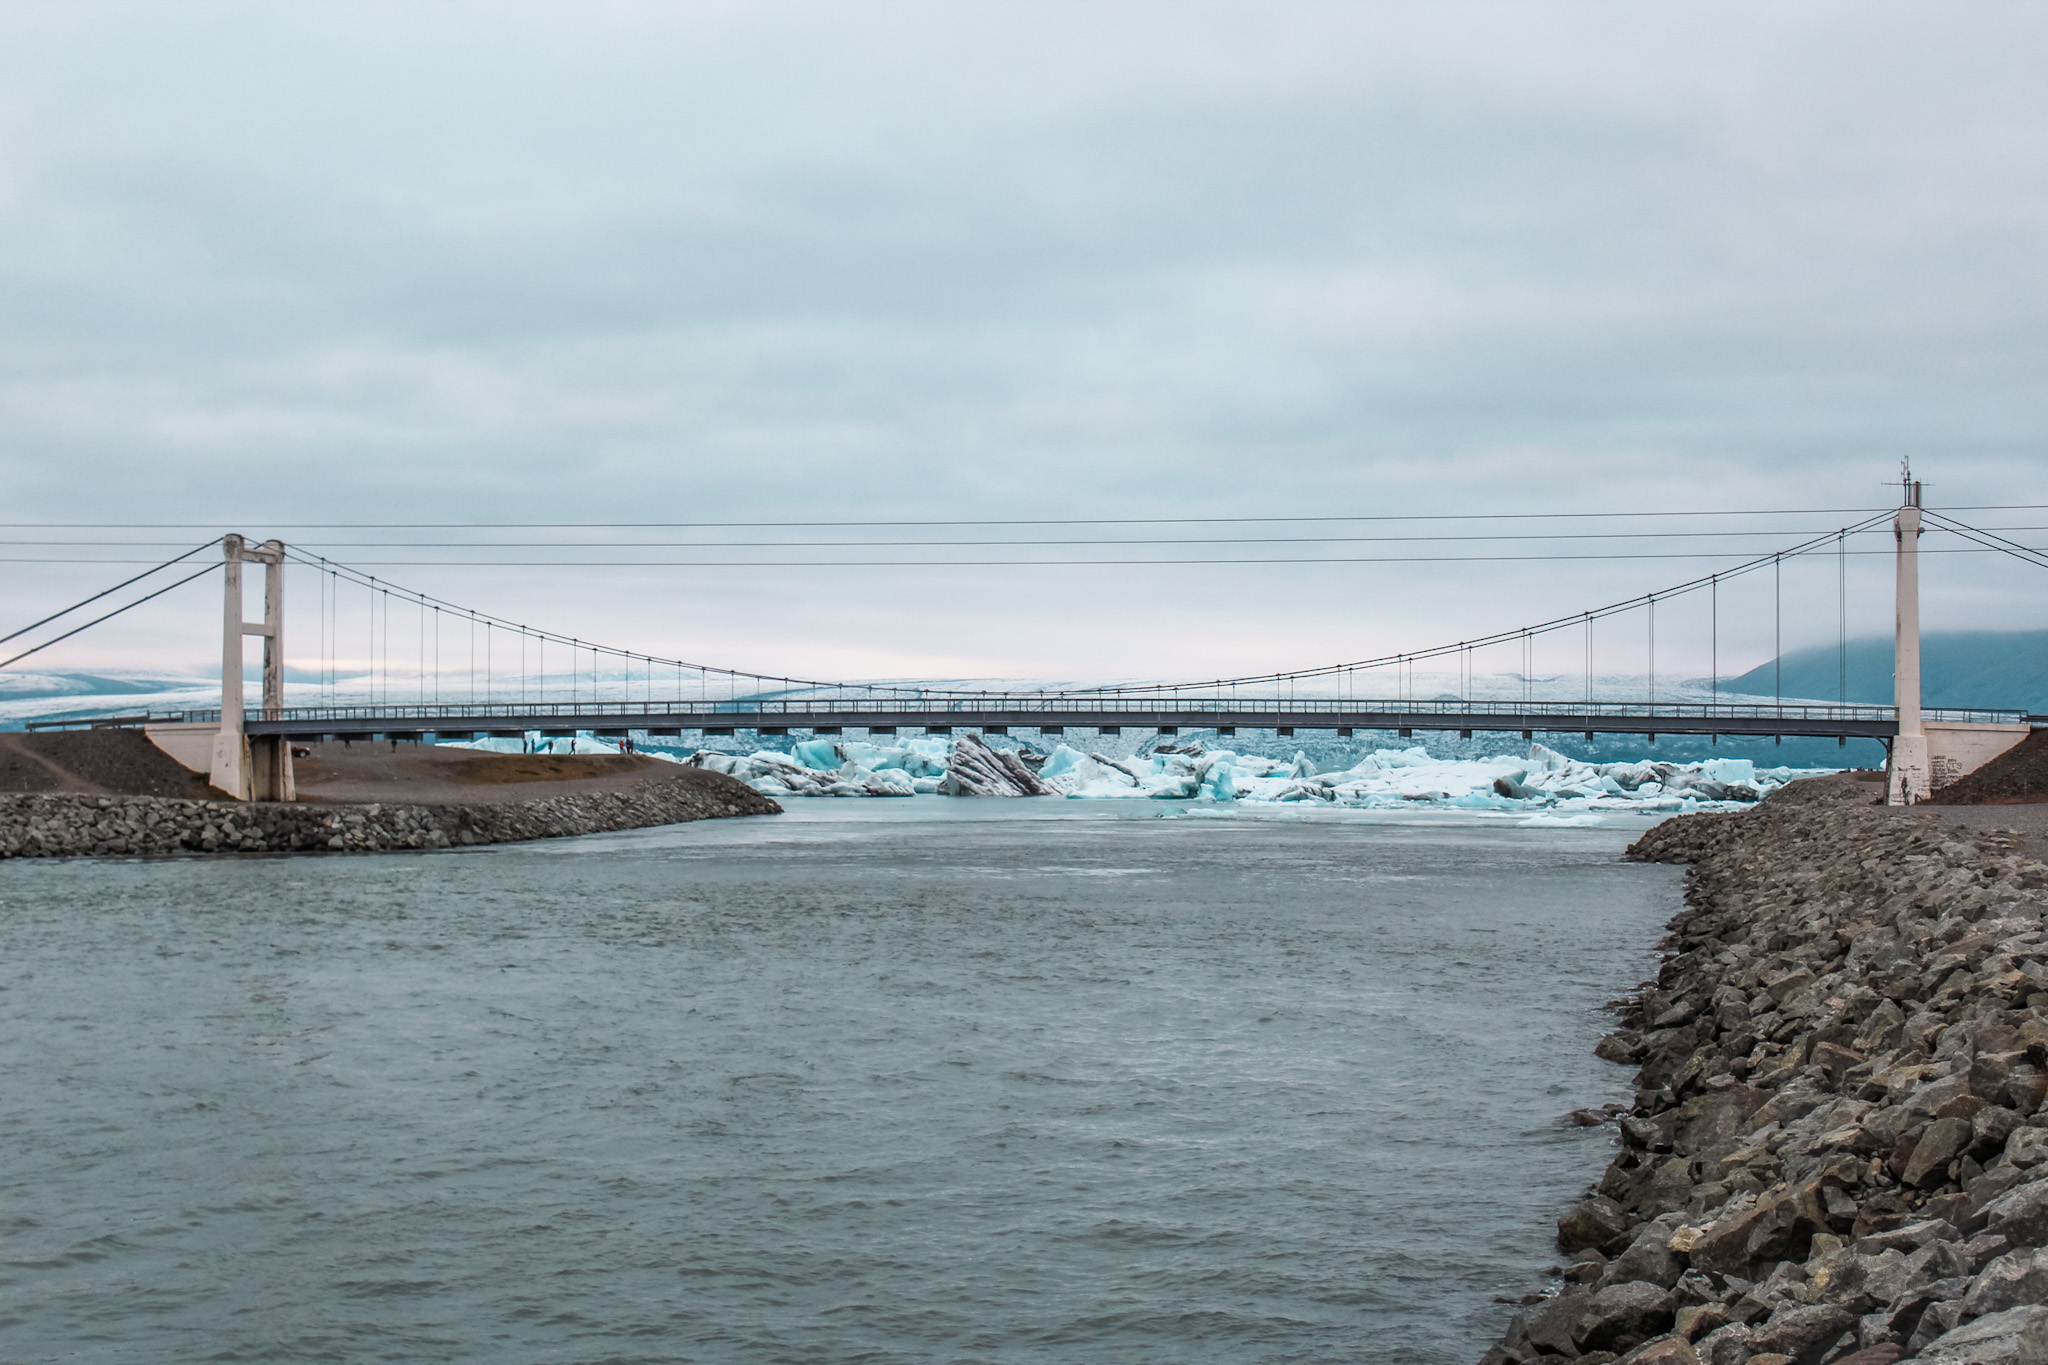 Jökulsarlonan Iceland Glacier Lagoon Bridge